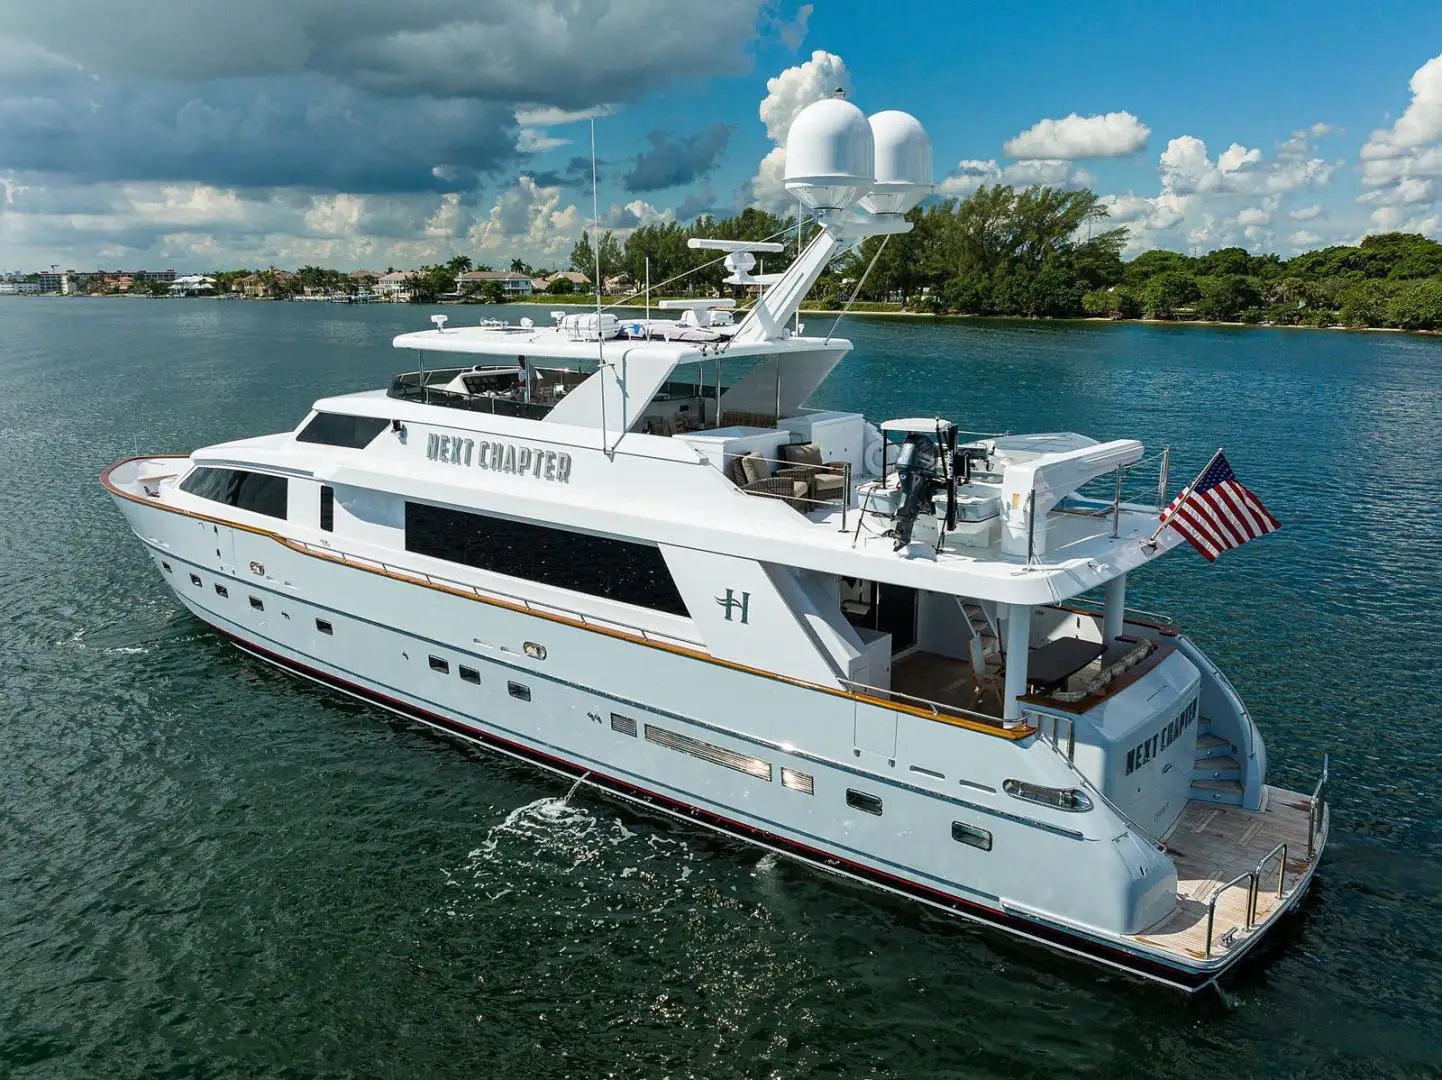 Luxury Yacht NEXT CHAPTER